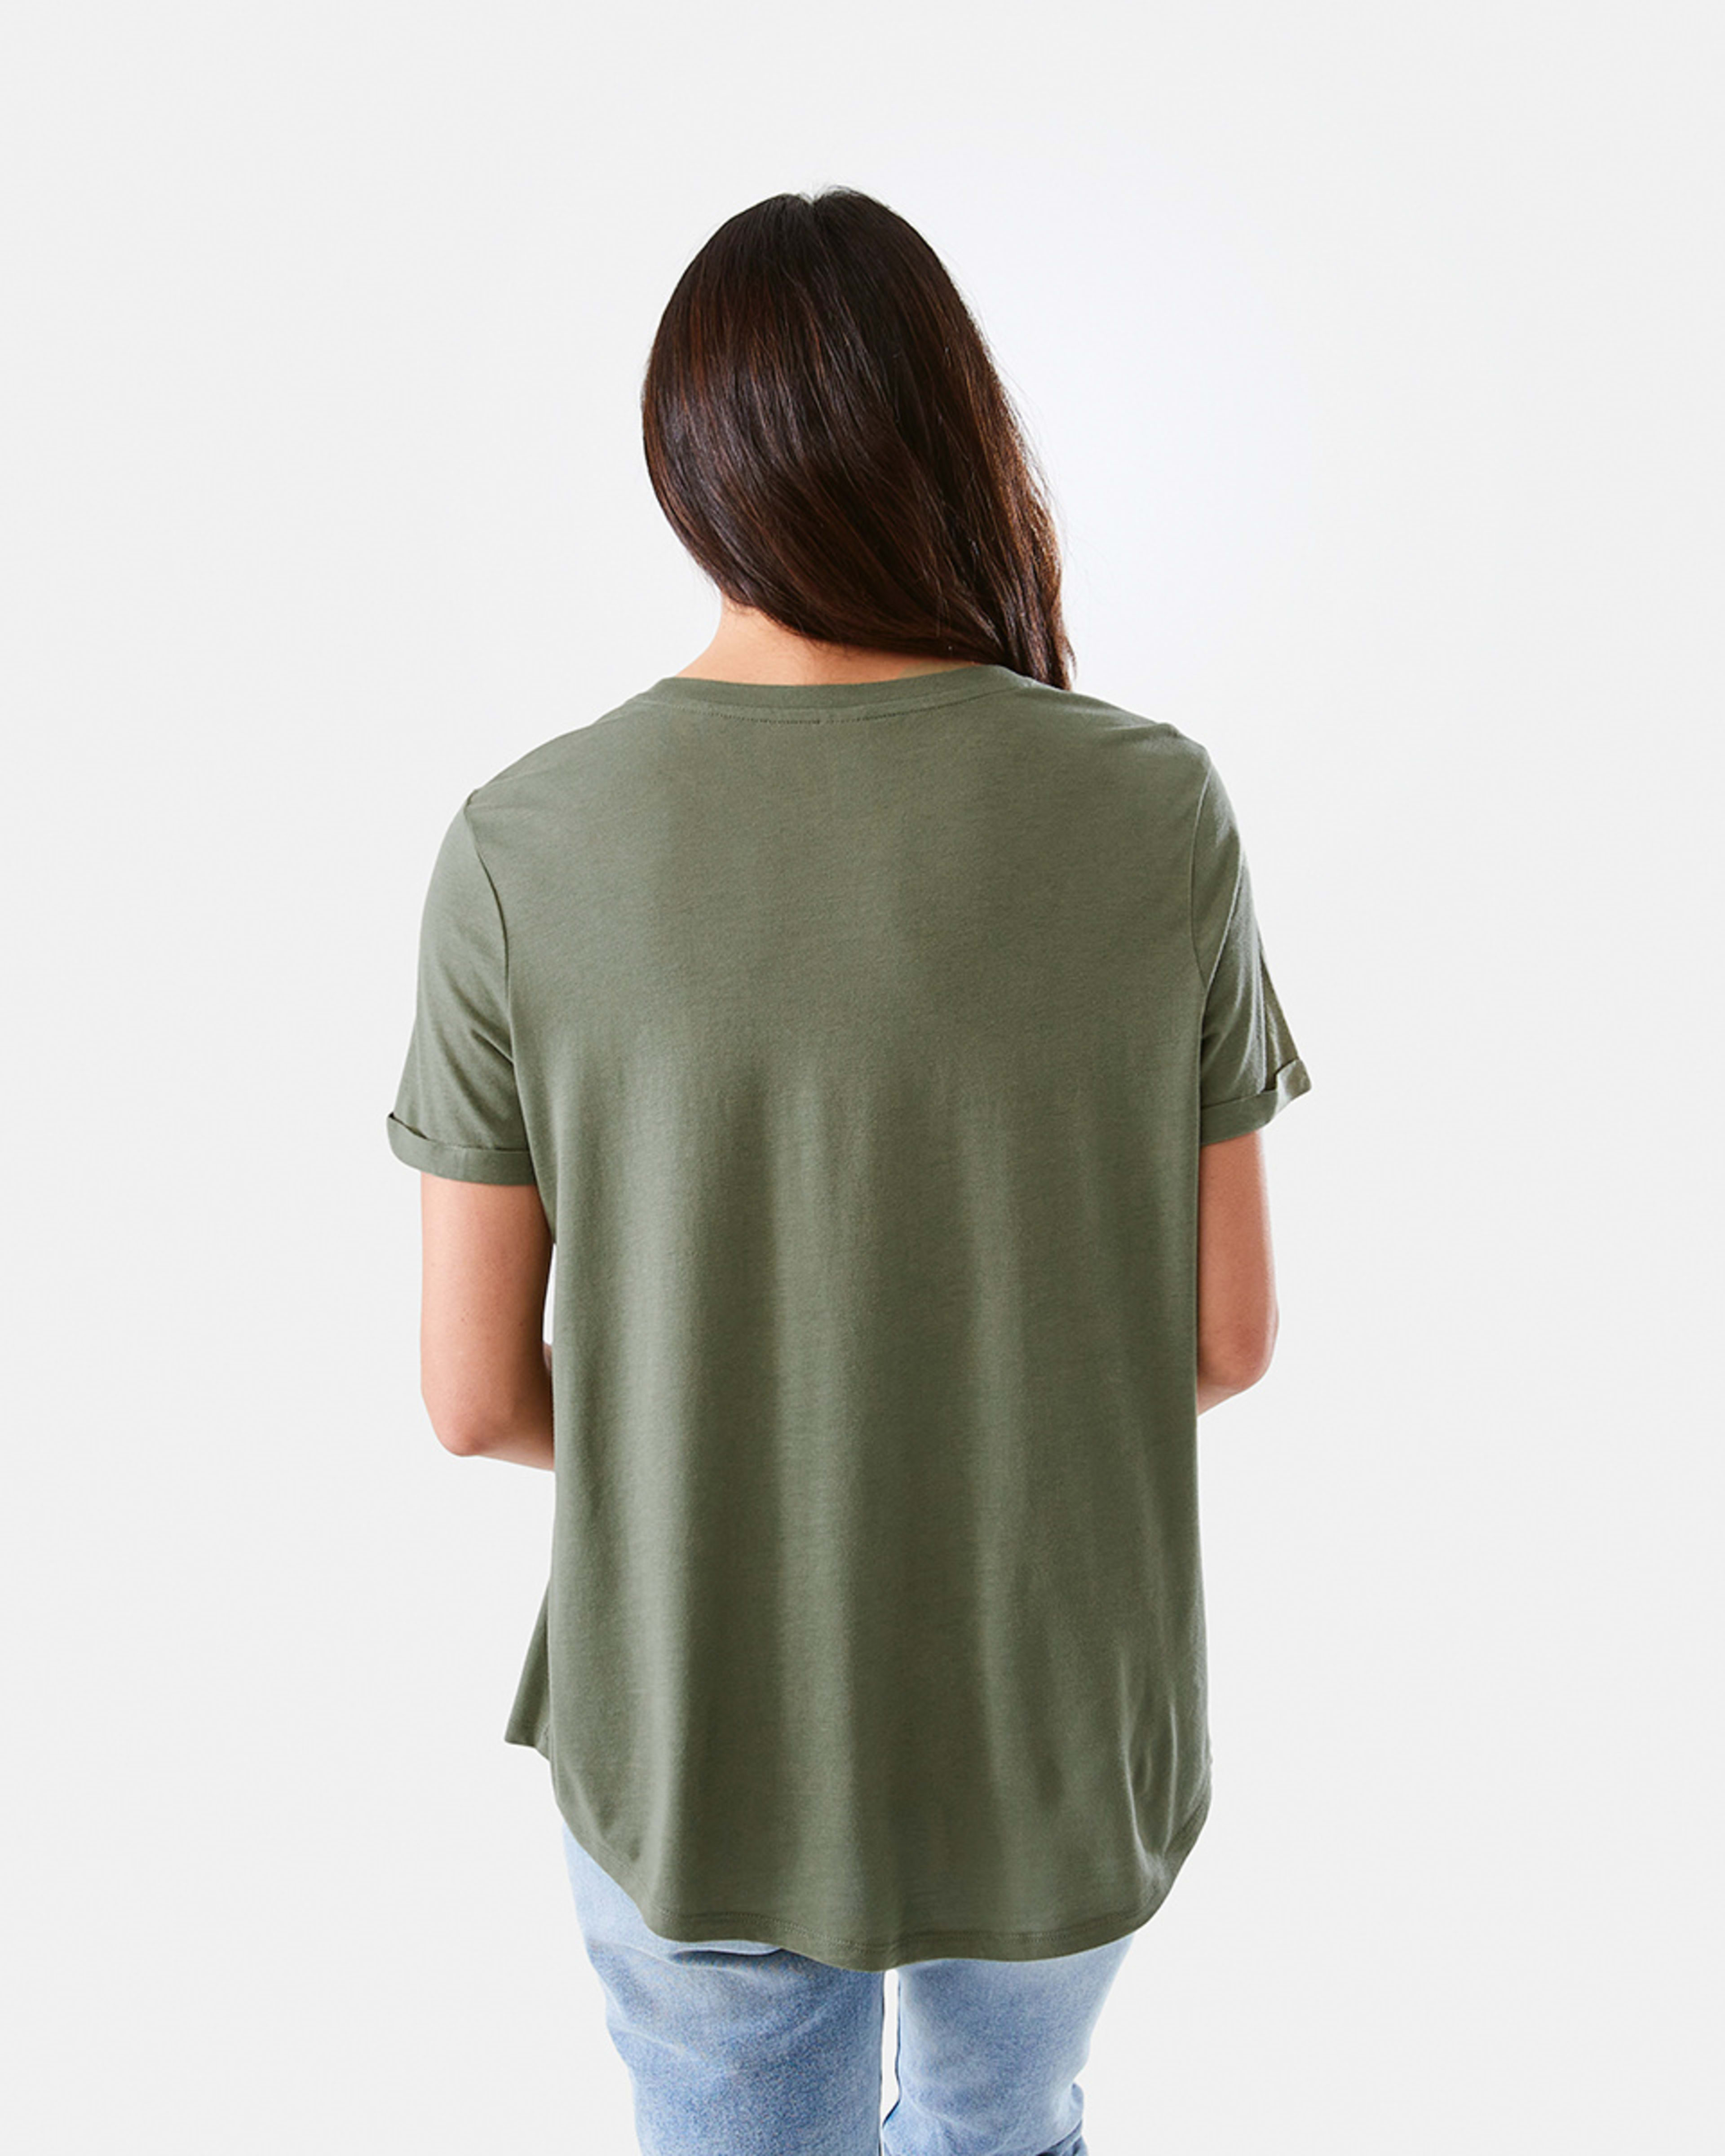 Short Sleeve Detailed Printed T-shirt - Kmart